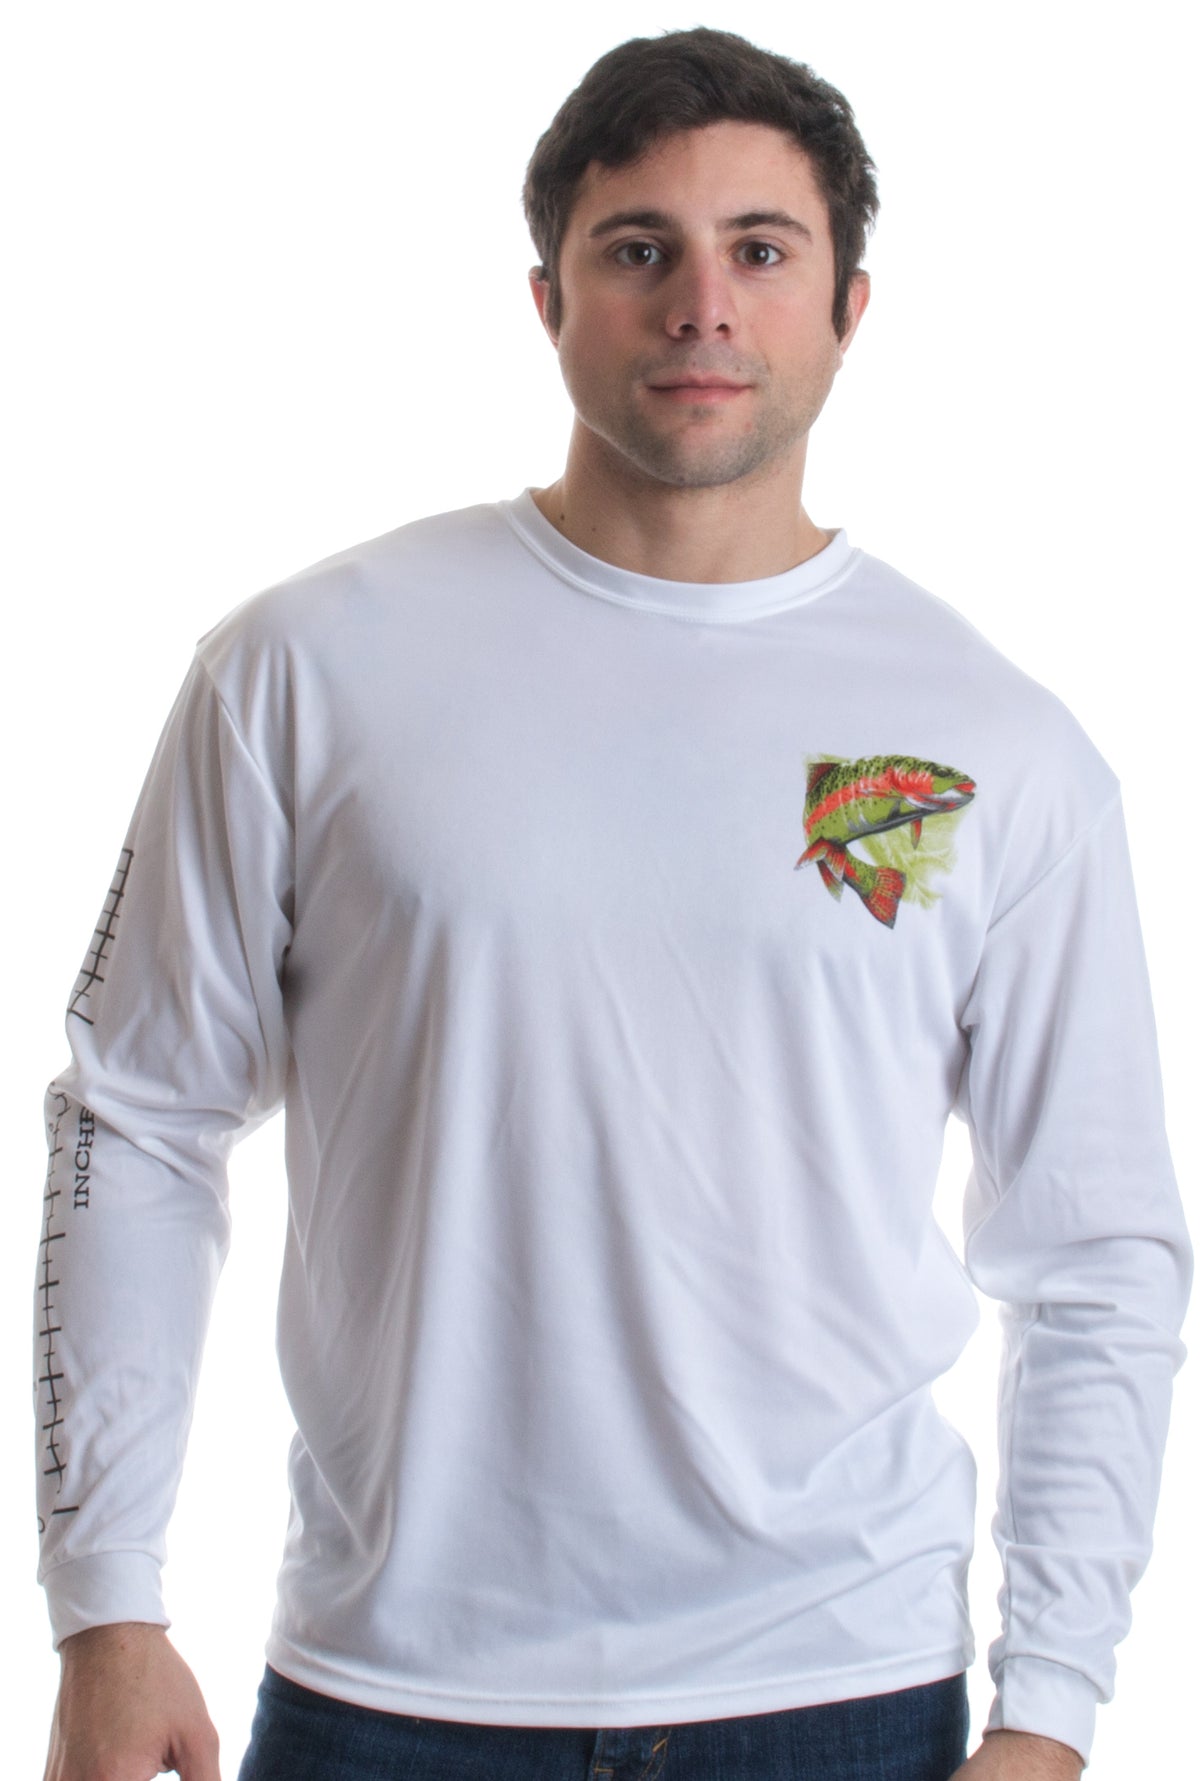 Fishing Ruler - Long Sleeve Wicking Fisherman Shirt Forearm Ruler T-sh –  Ann Arbor T-shirt Company